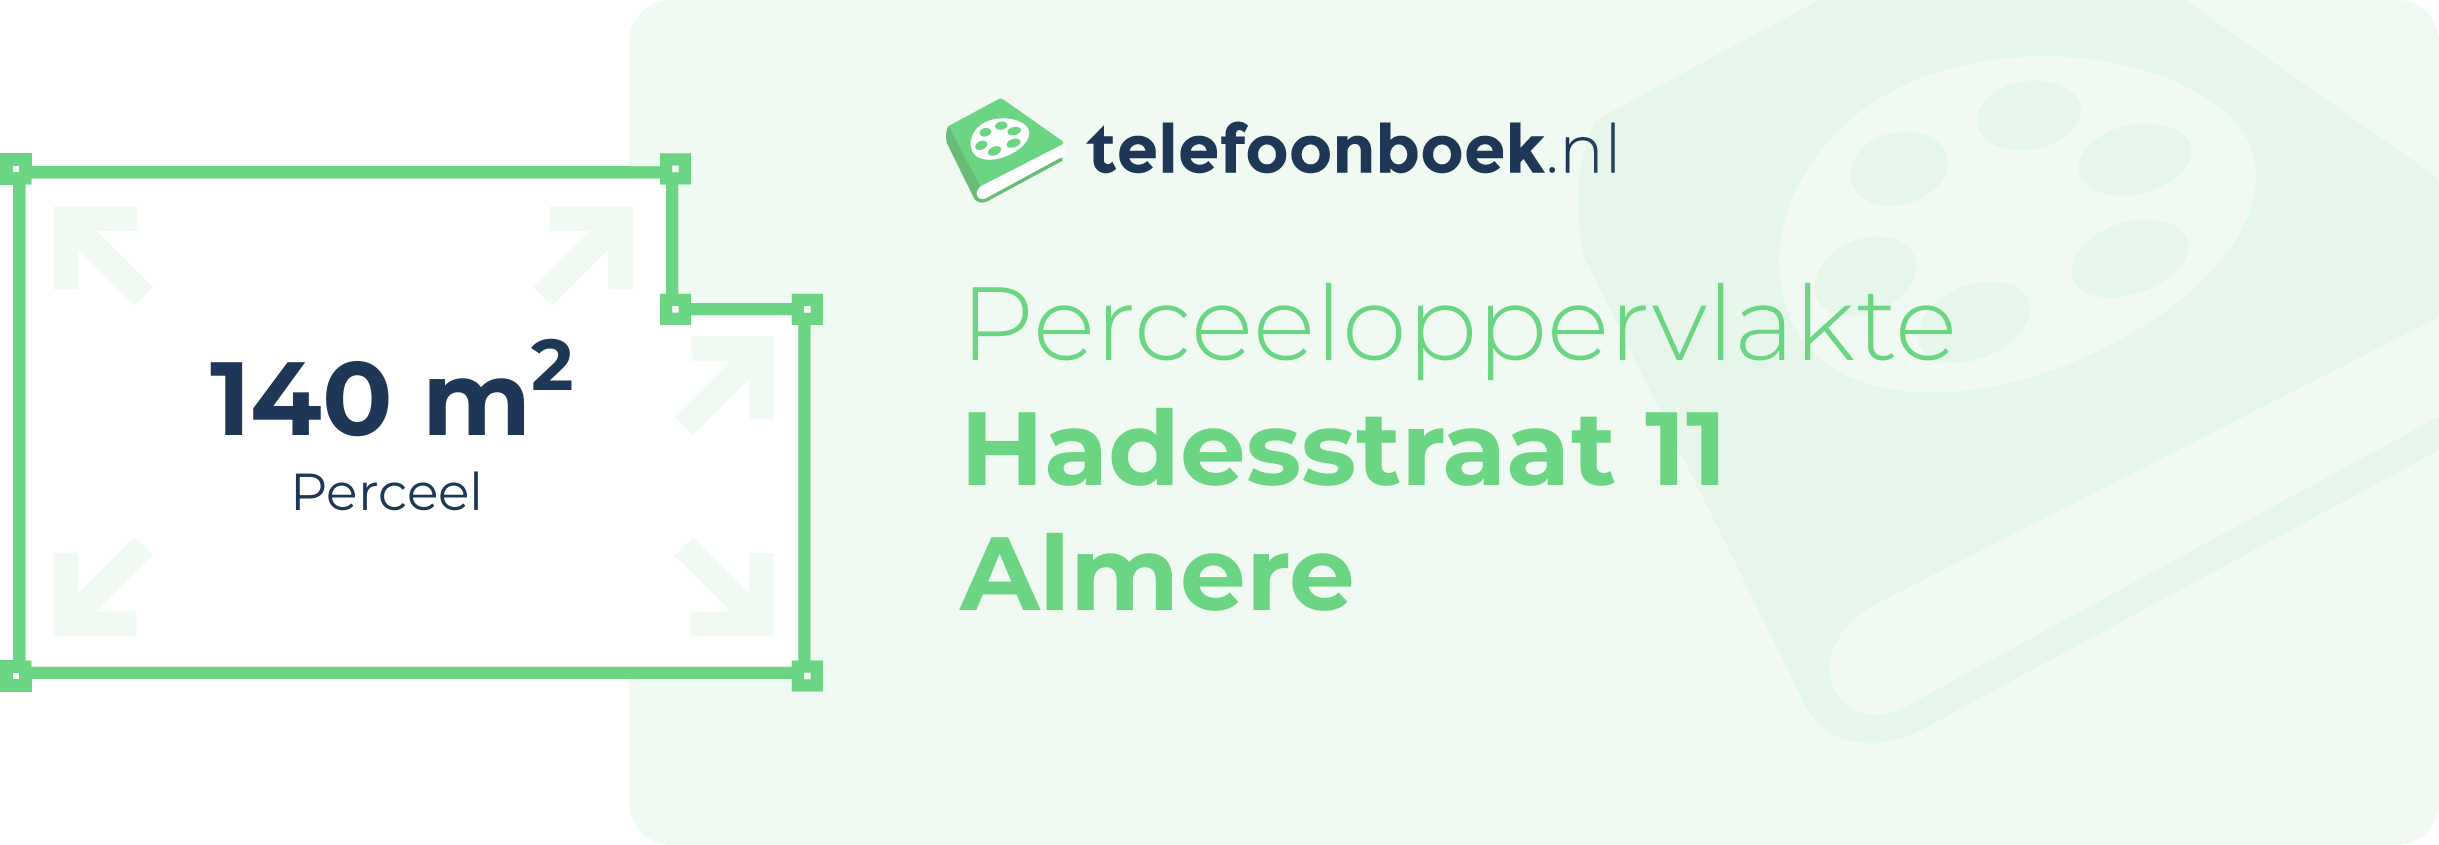 Perceeloppervlakte Hadesstraat 11 Almere